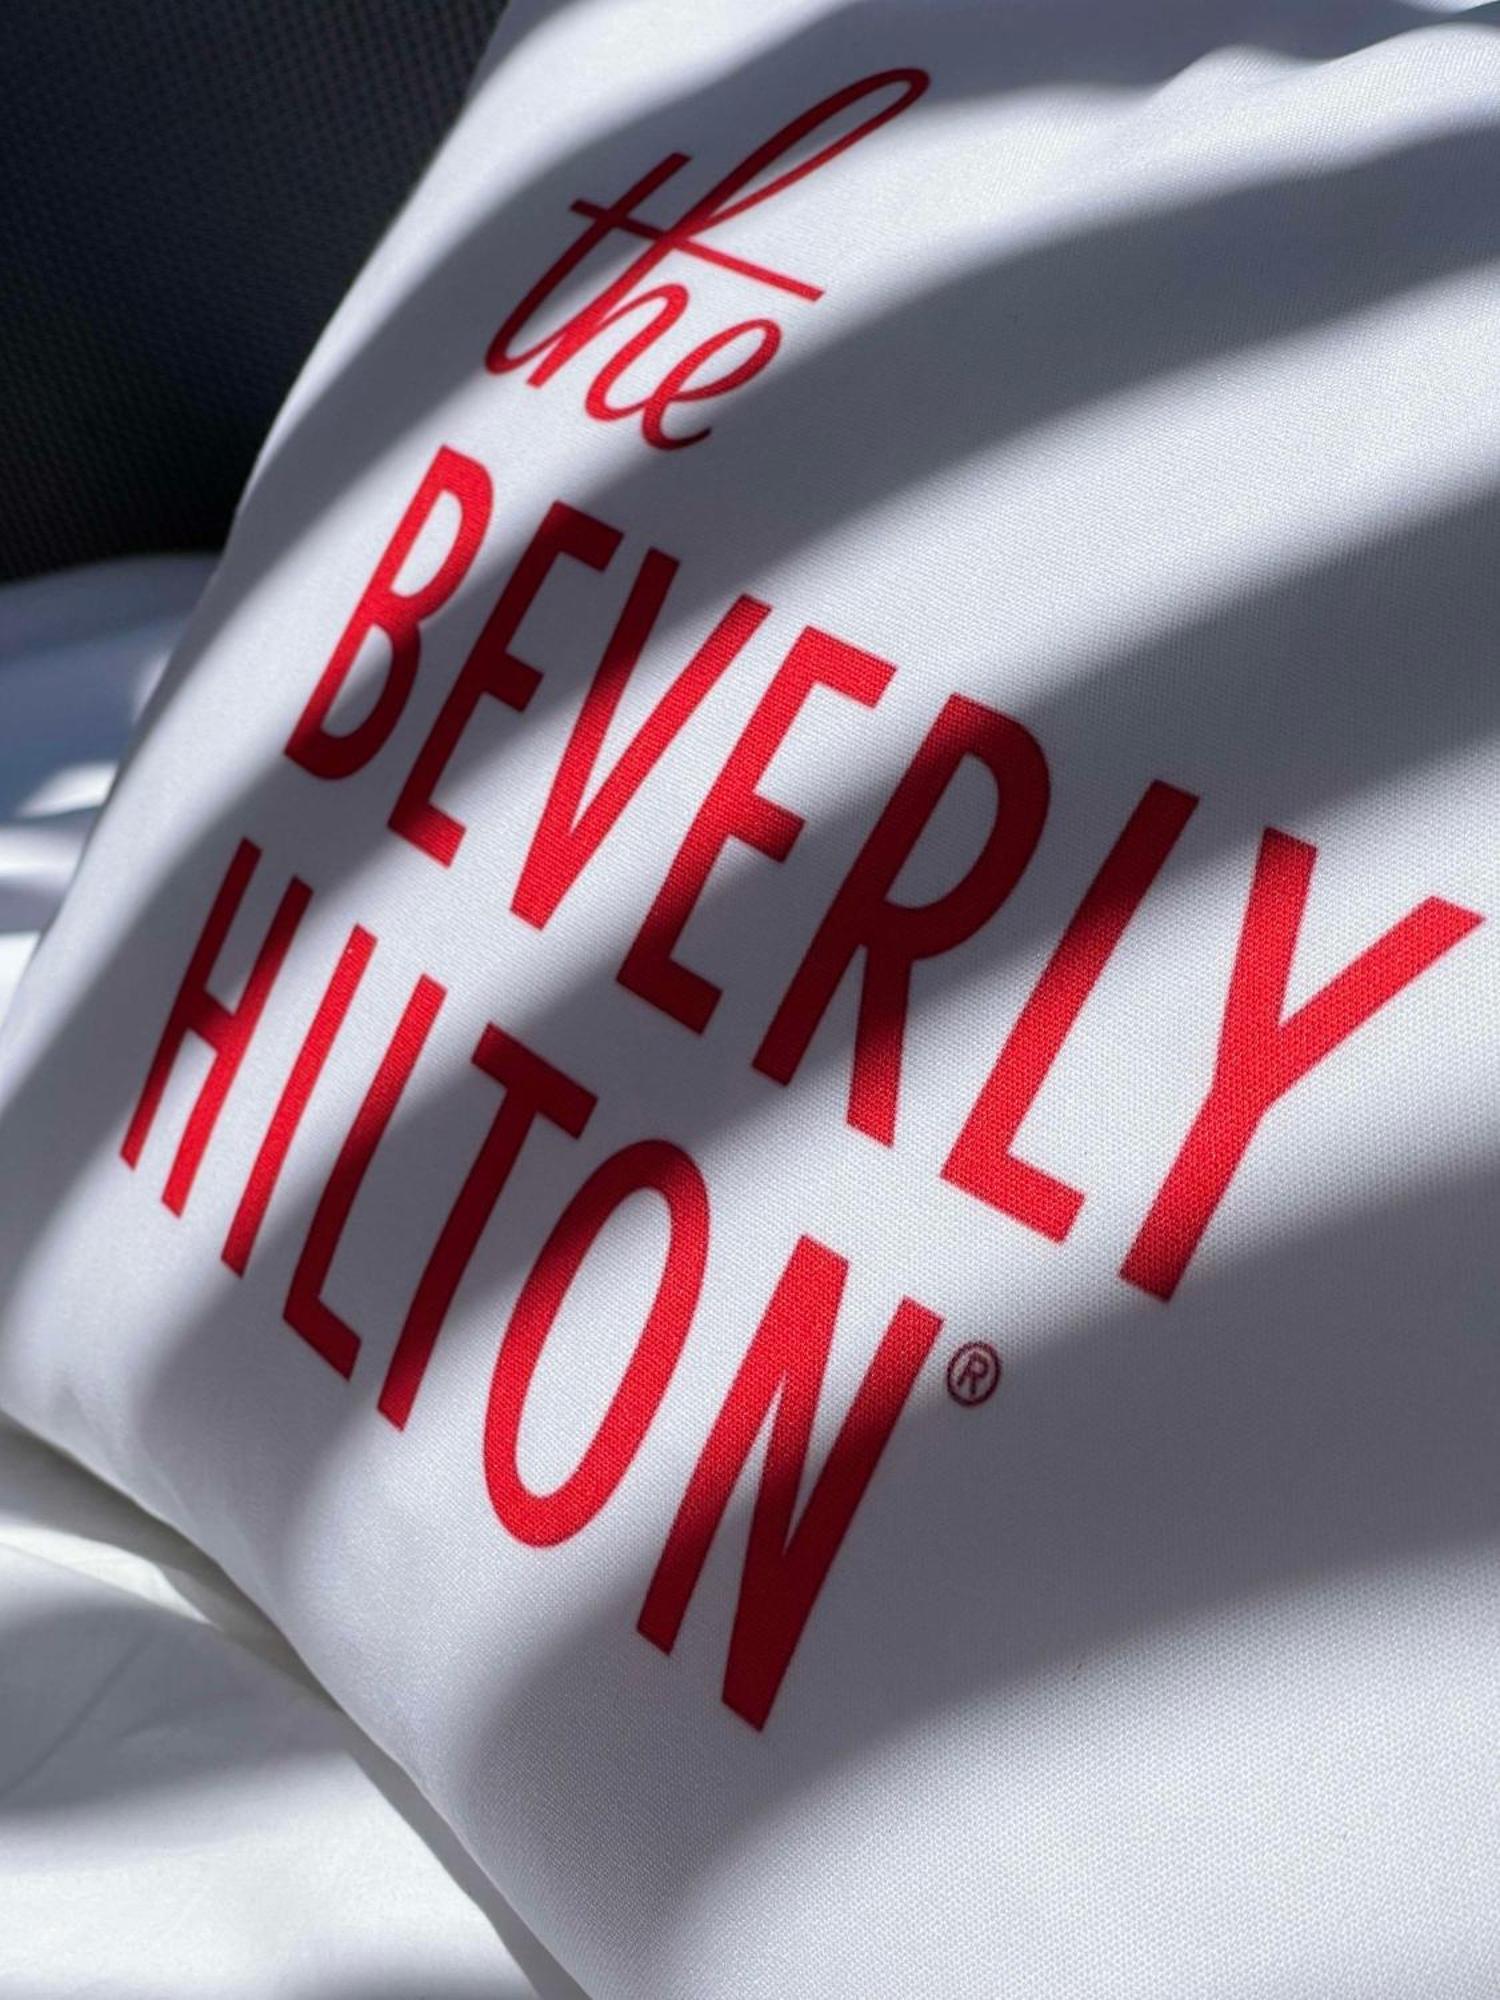 The Beverly Hilton Los Angeles Dış mekan fotoğraf